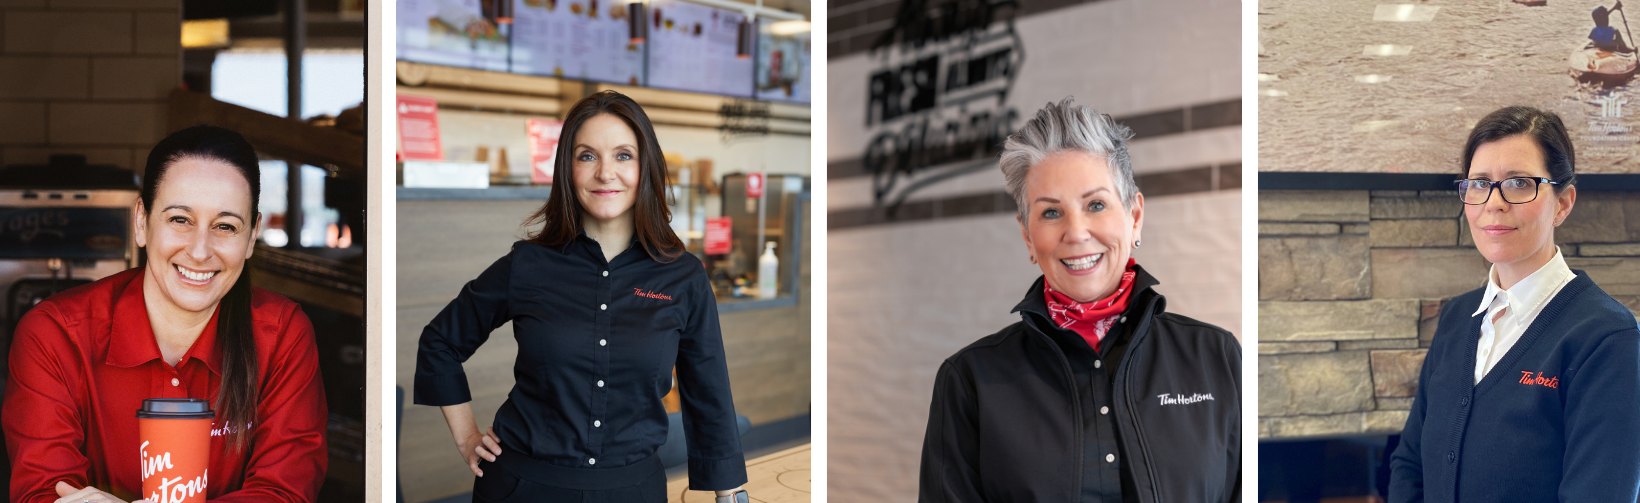 #TeamTims: Celebrating Restaurant Owners on International Women's Day